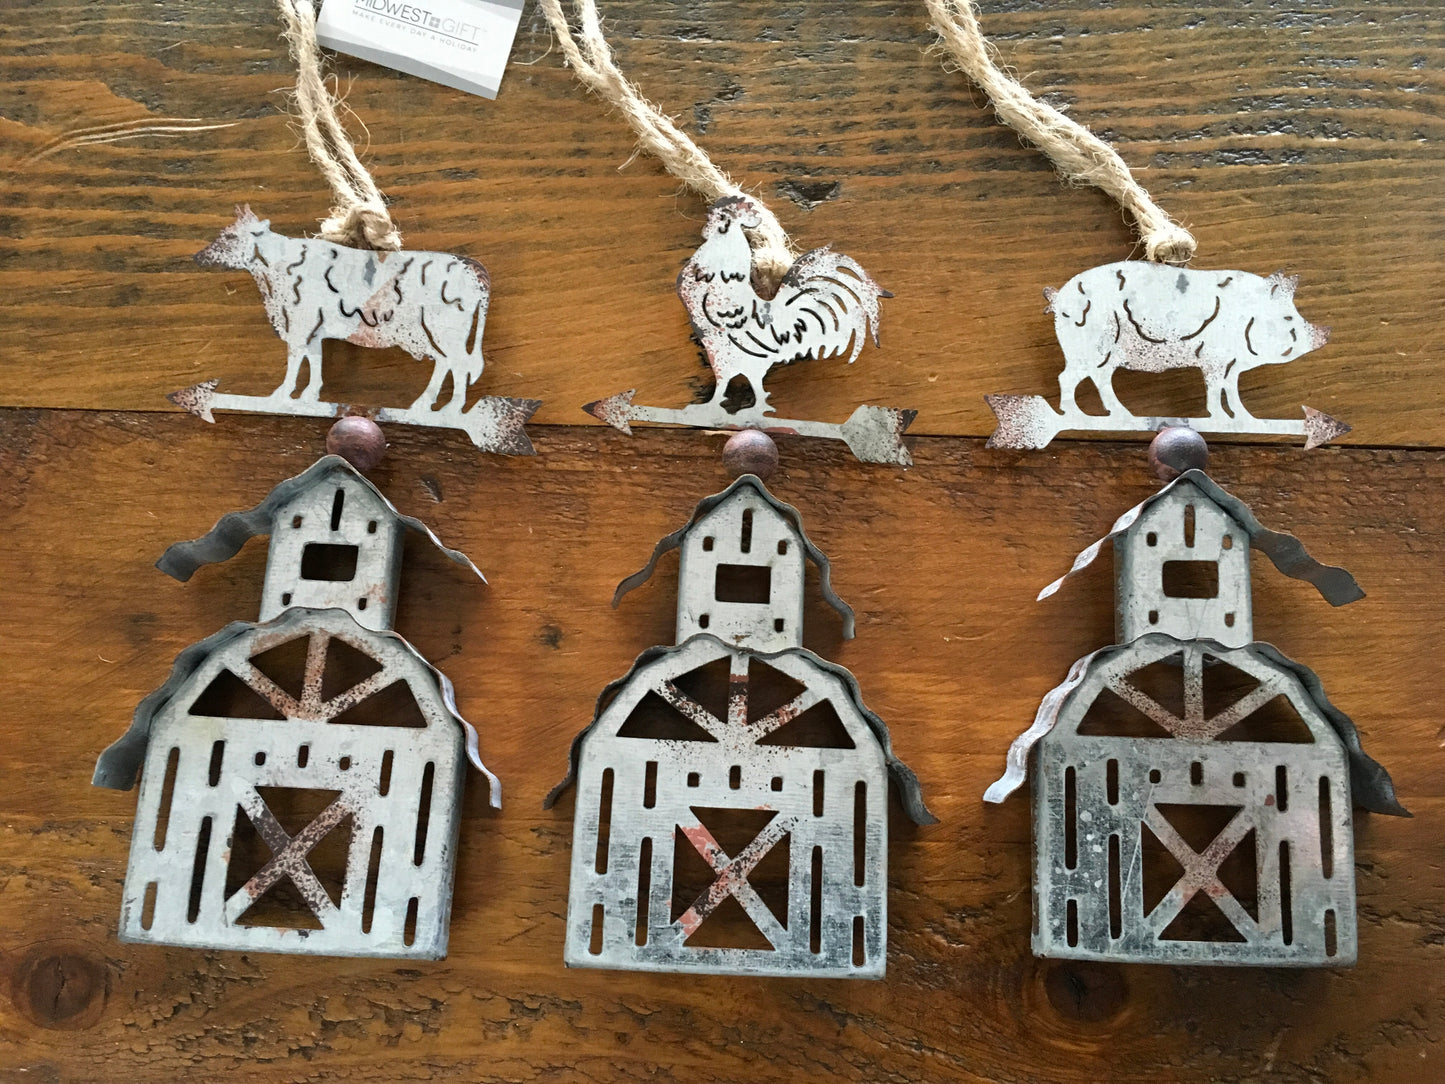 Giftware Barn weather vane Christmas ornaments